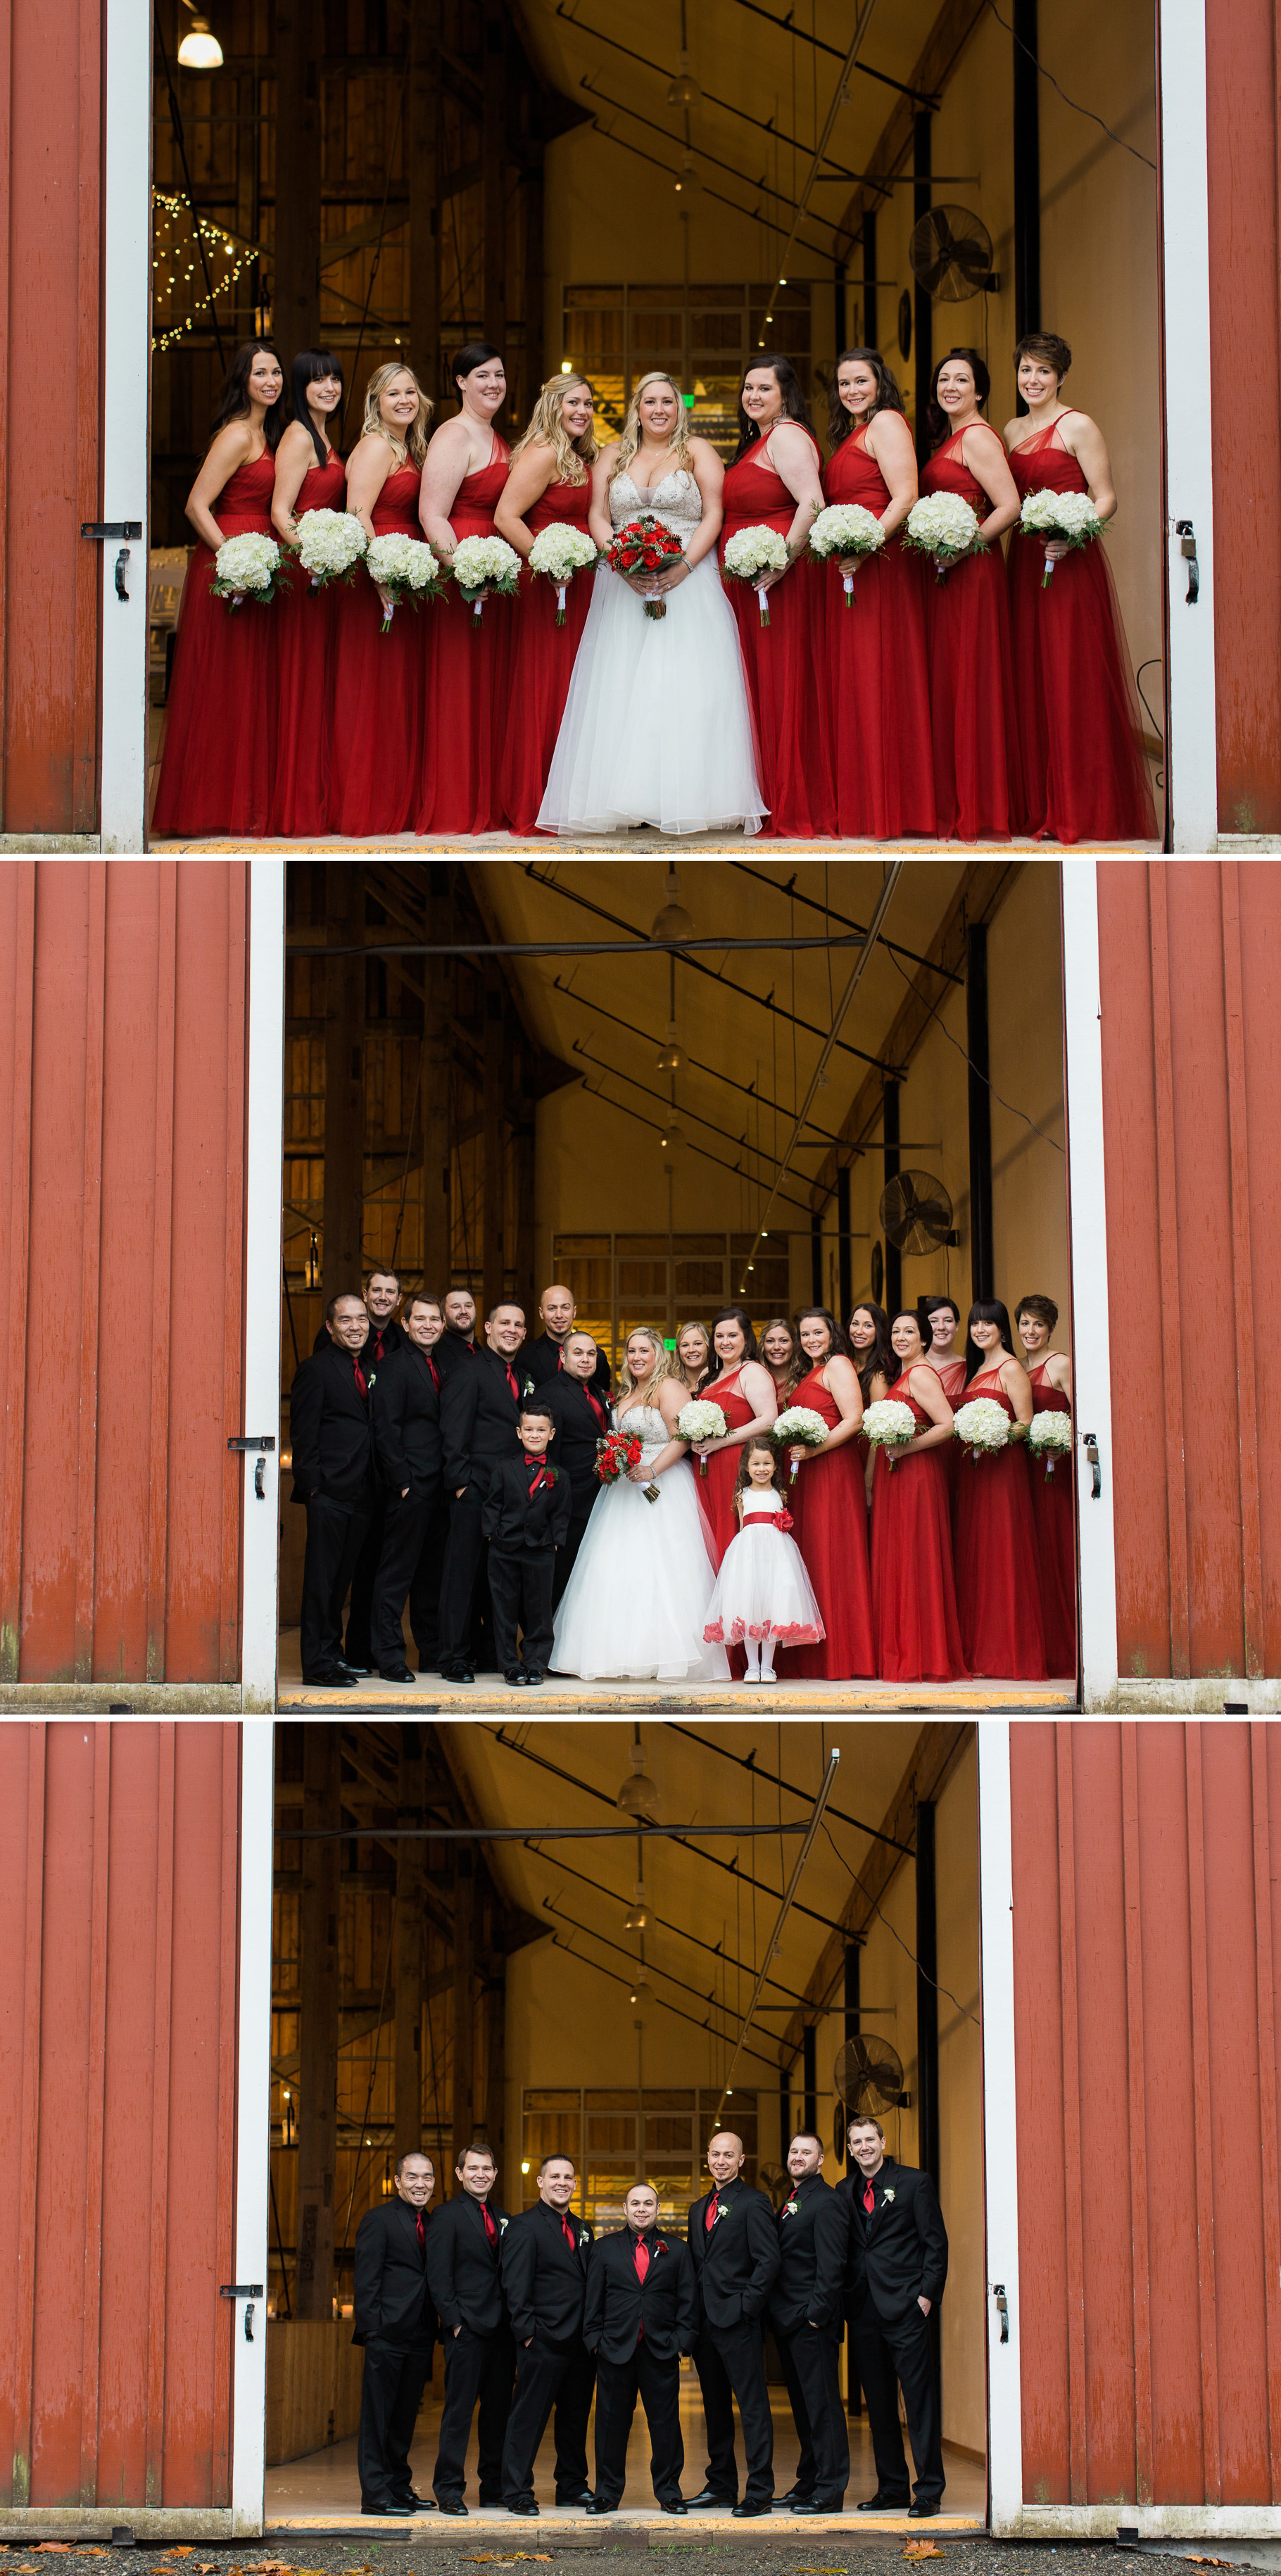 14-Bride-Groom-Bridal-Party-Bridesmaids-Groomsmen-Pickering-Barn-Issaquah-Christmas-Wedding-Winter-Wedding-Photographer-Seattle-Photography-by-Betty-Elaine-2